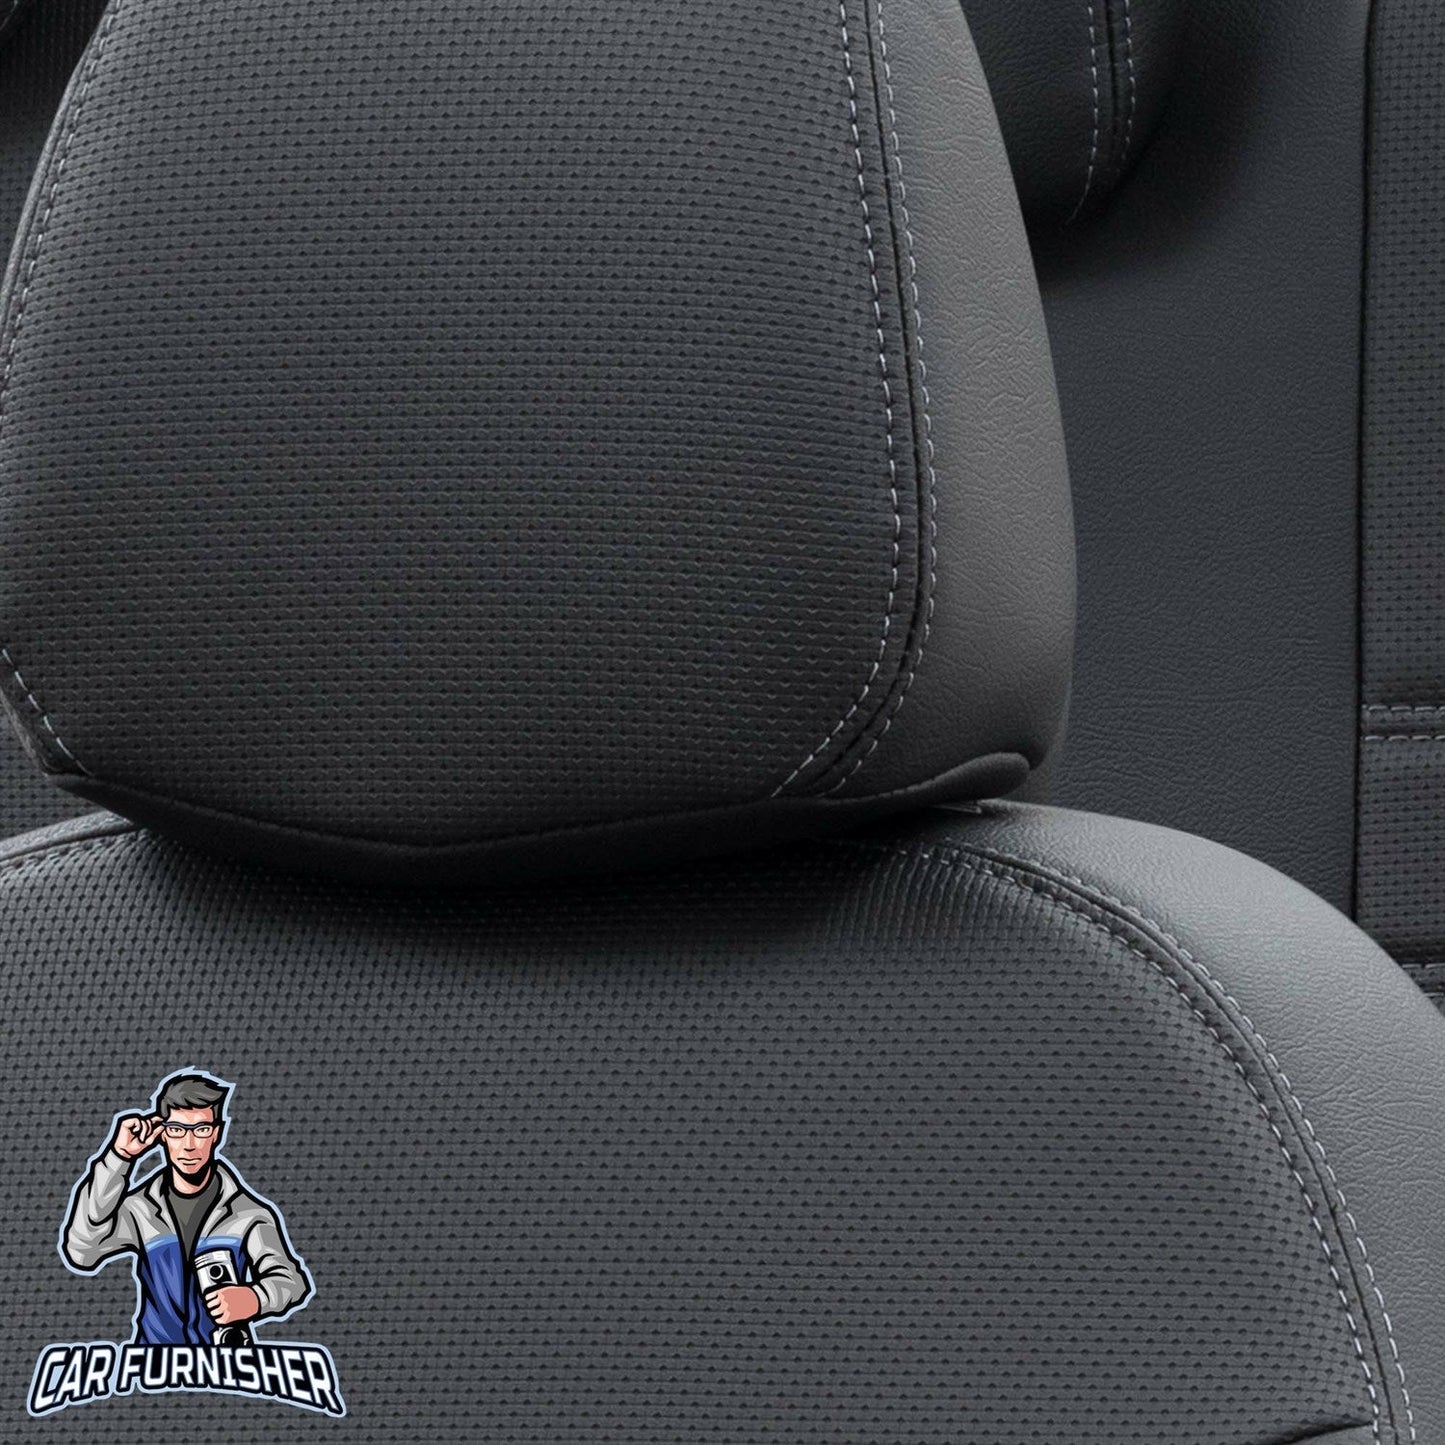 Chevrolet Captiva Seat Cover New York Leather Design Black Leather